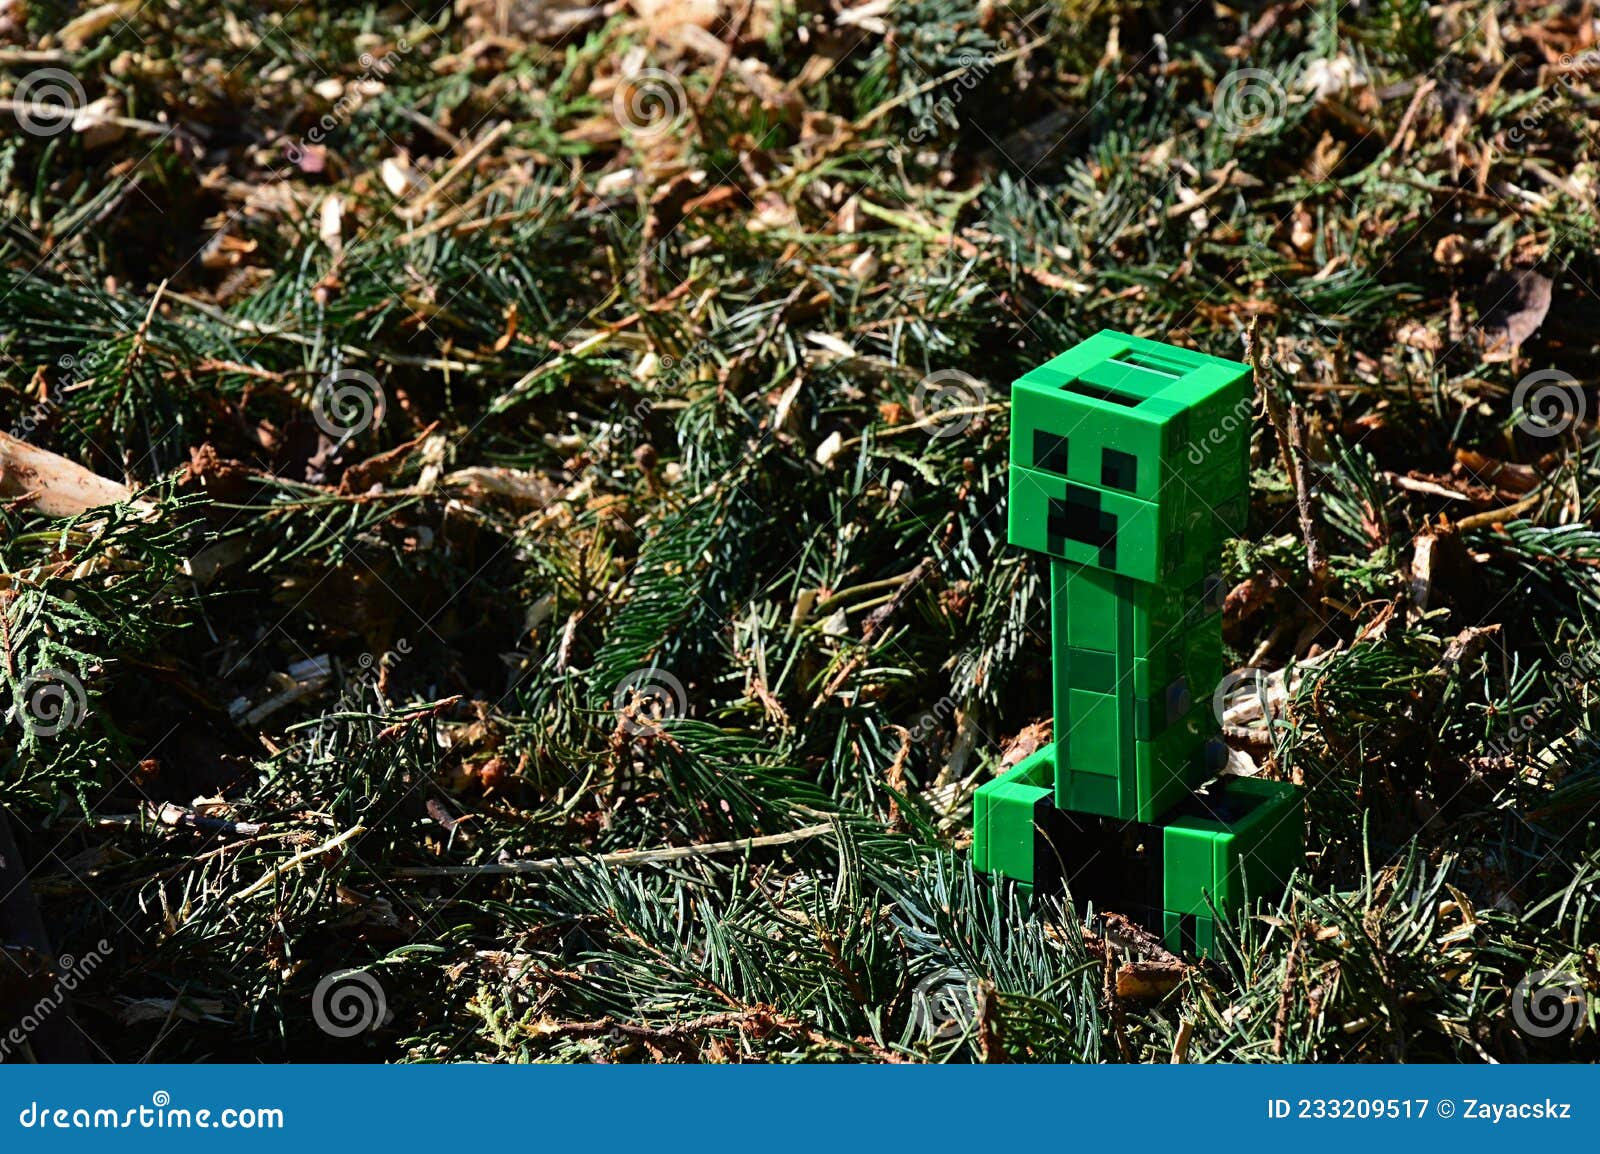 LEGO Minecraft Large Green Action Figure of Dangerous Explosive